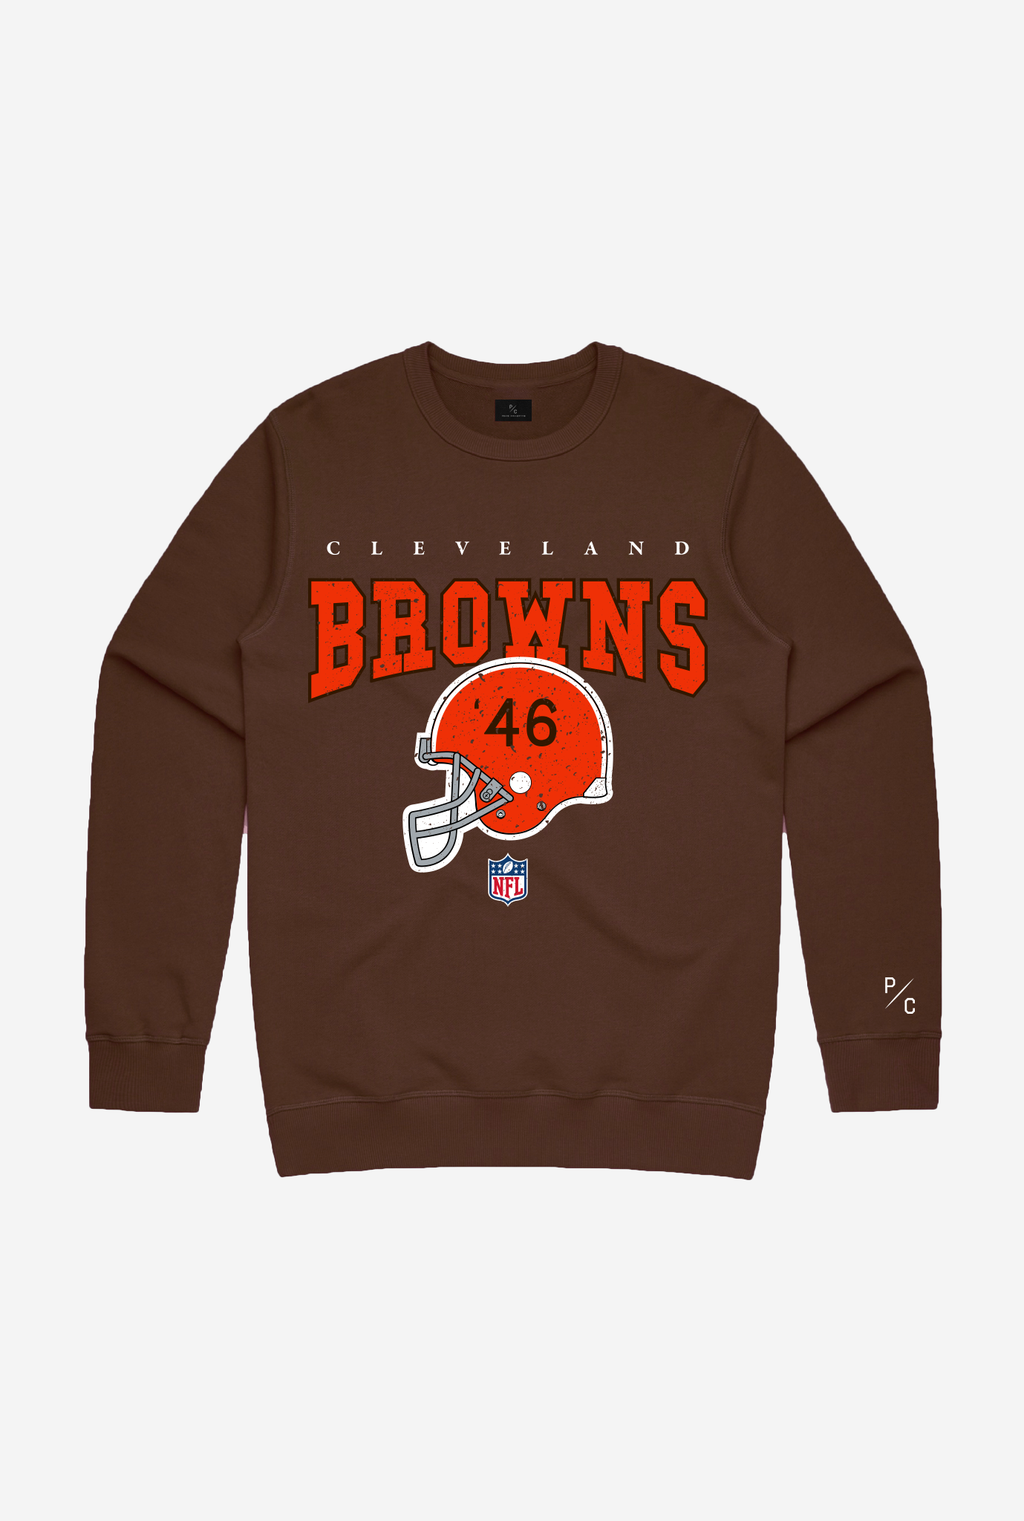 Browns Peanuts The Browns Crewneck